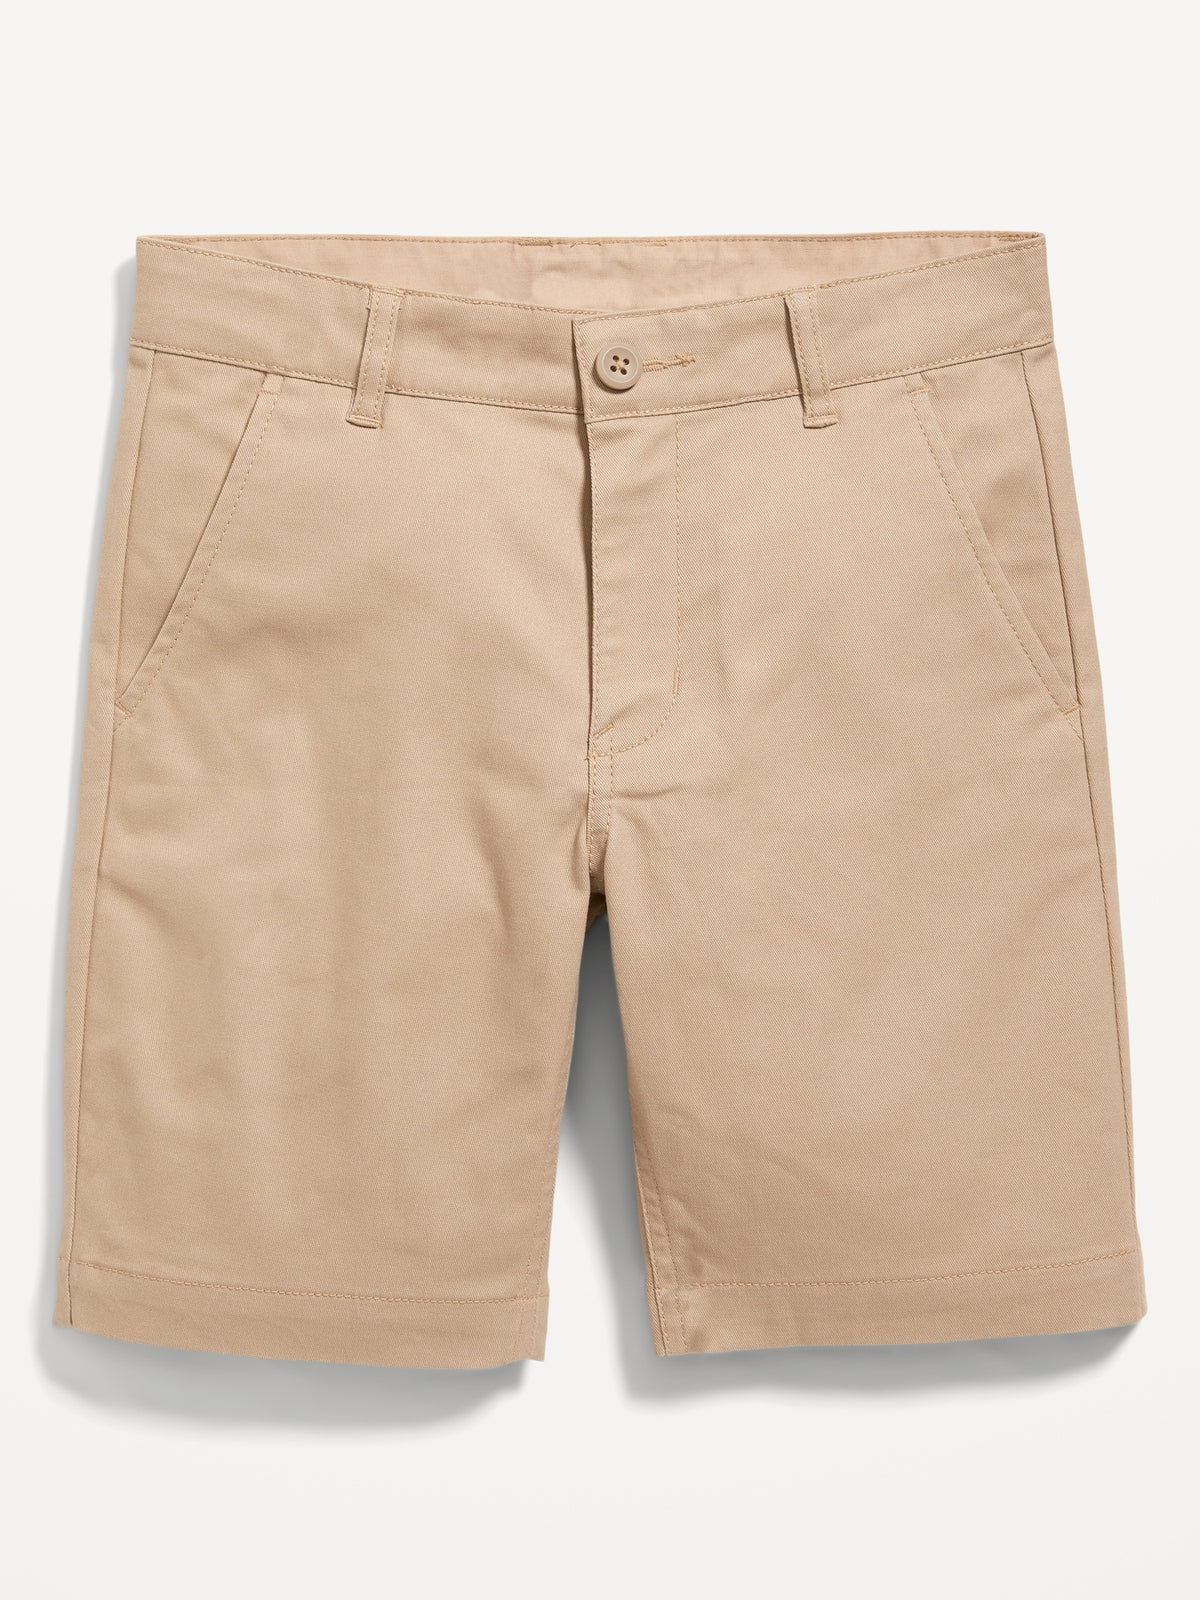 Built-In Flex Twill School Uniform Shorts for Boys (At Knee)